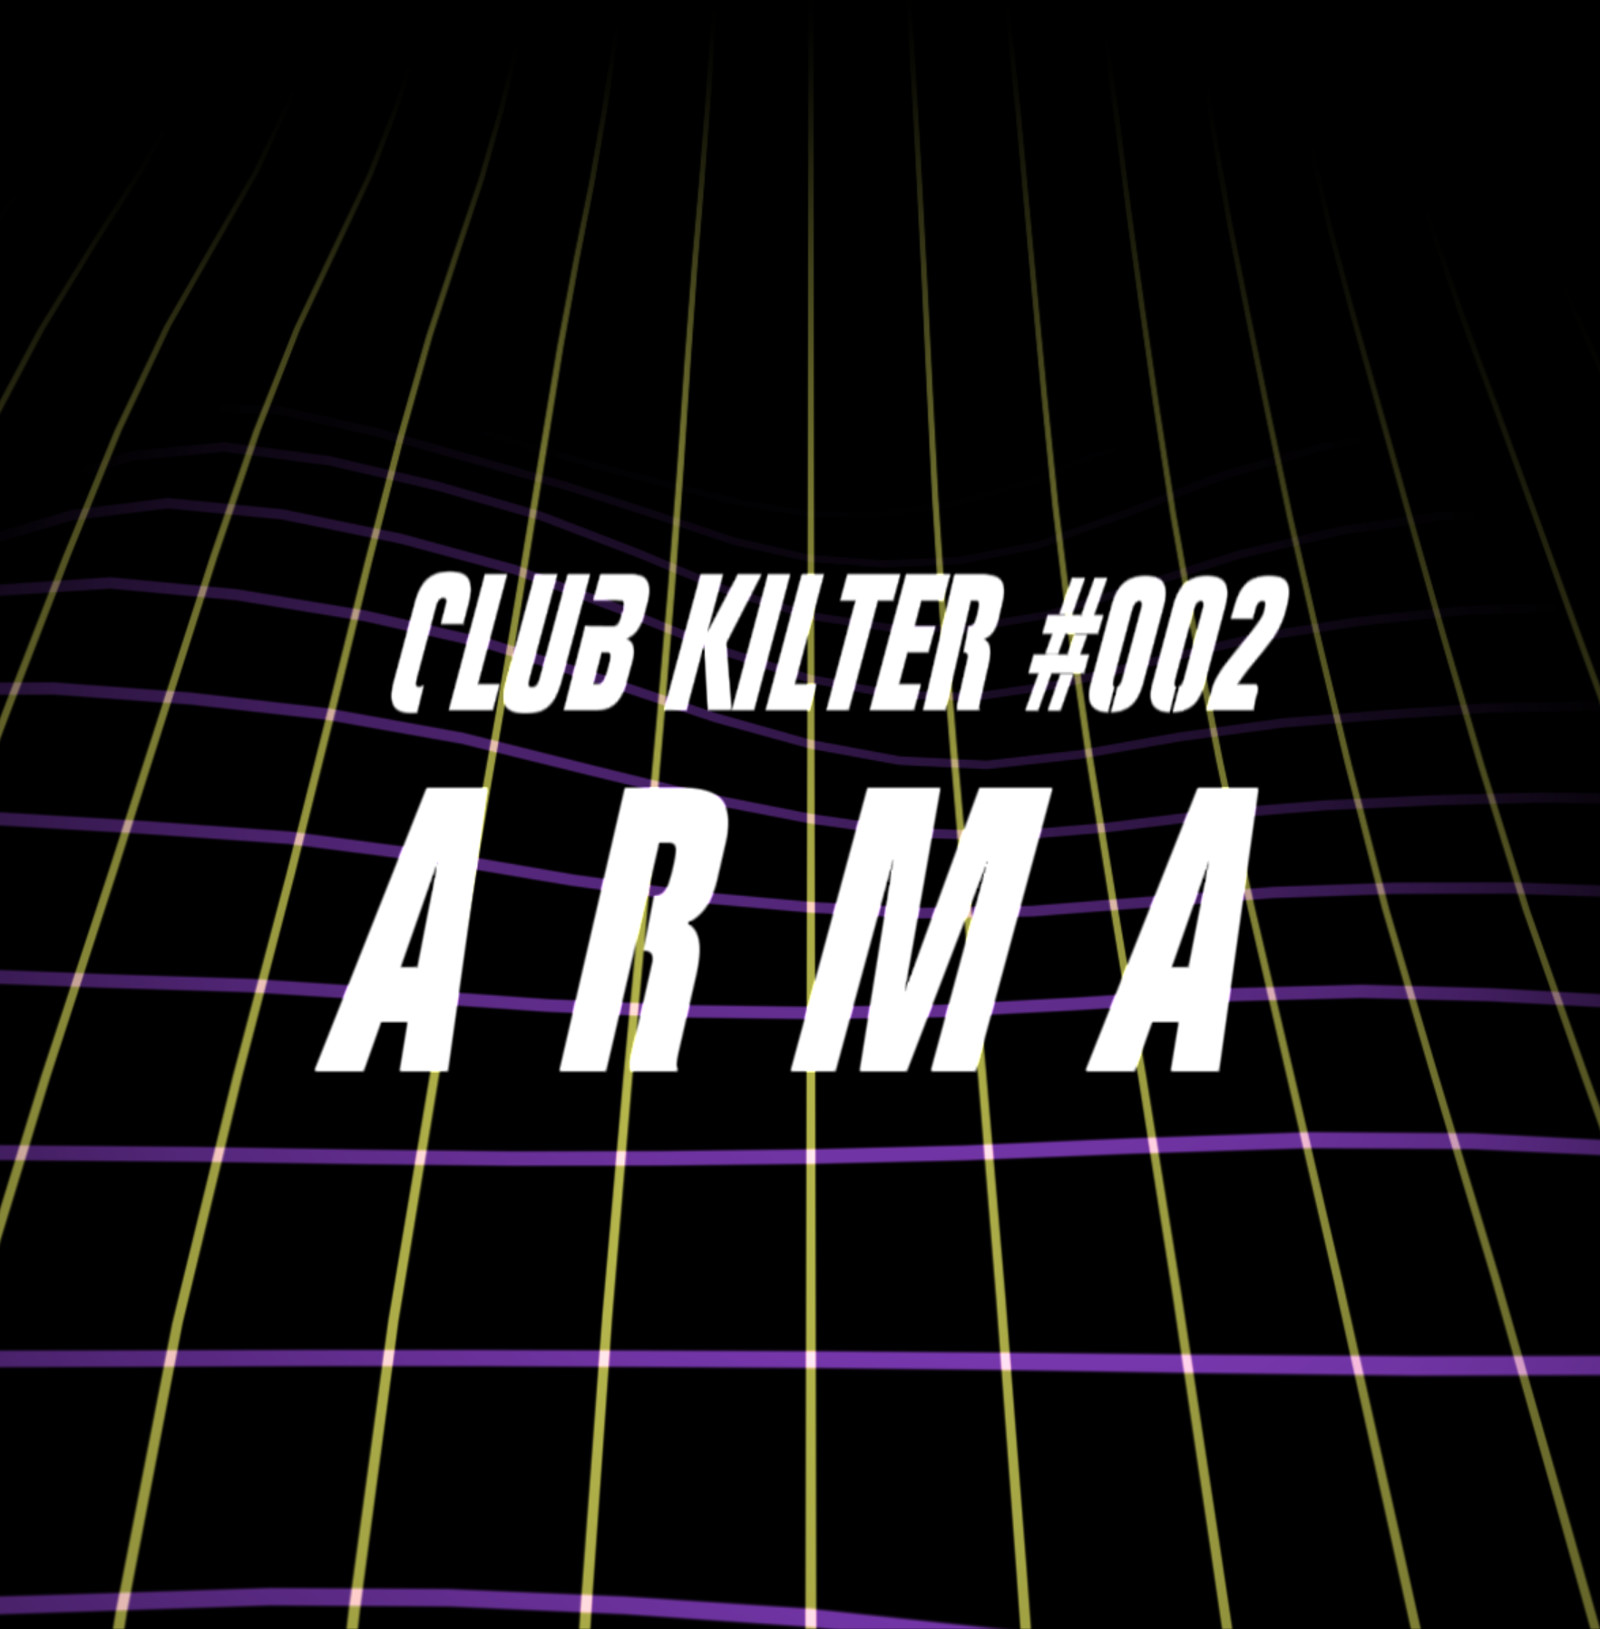 Club Kilter #002 - Arma at Pata Negra